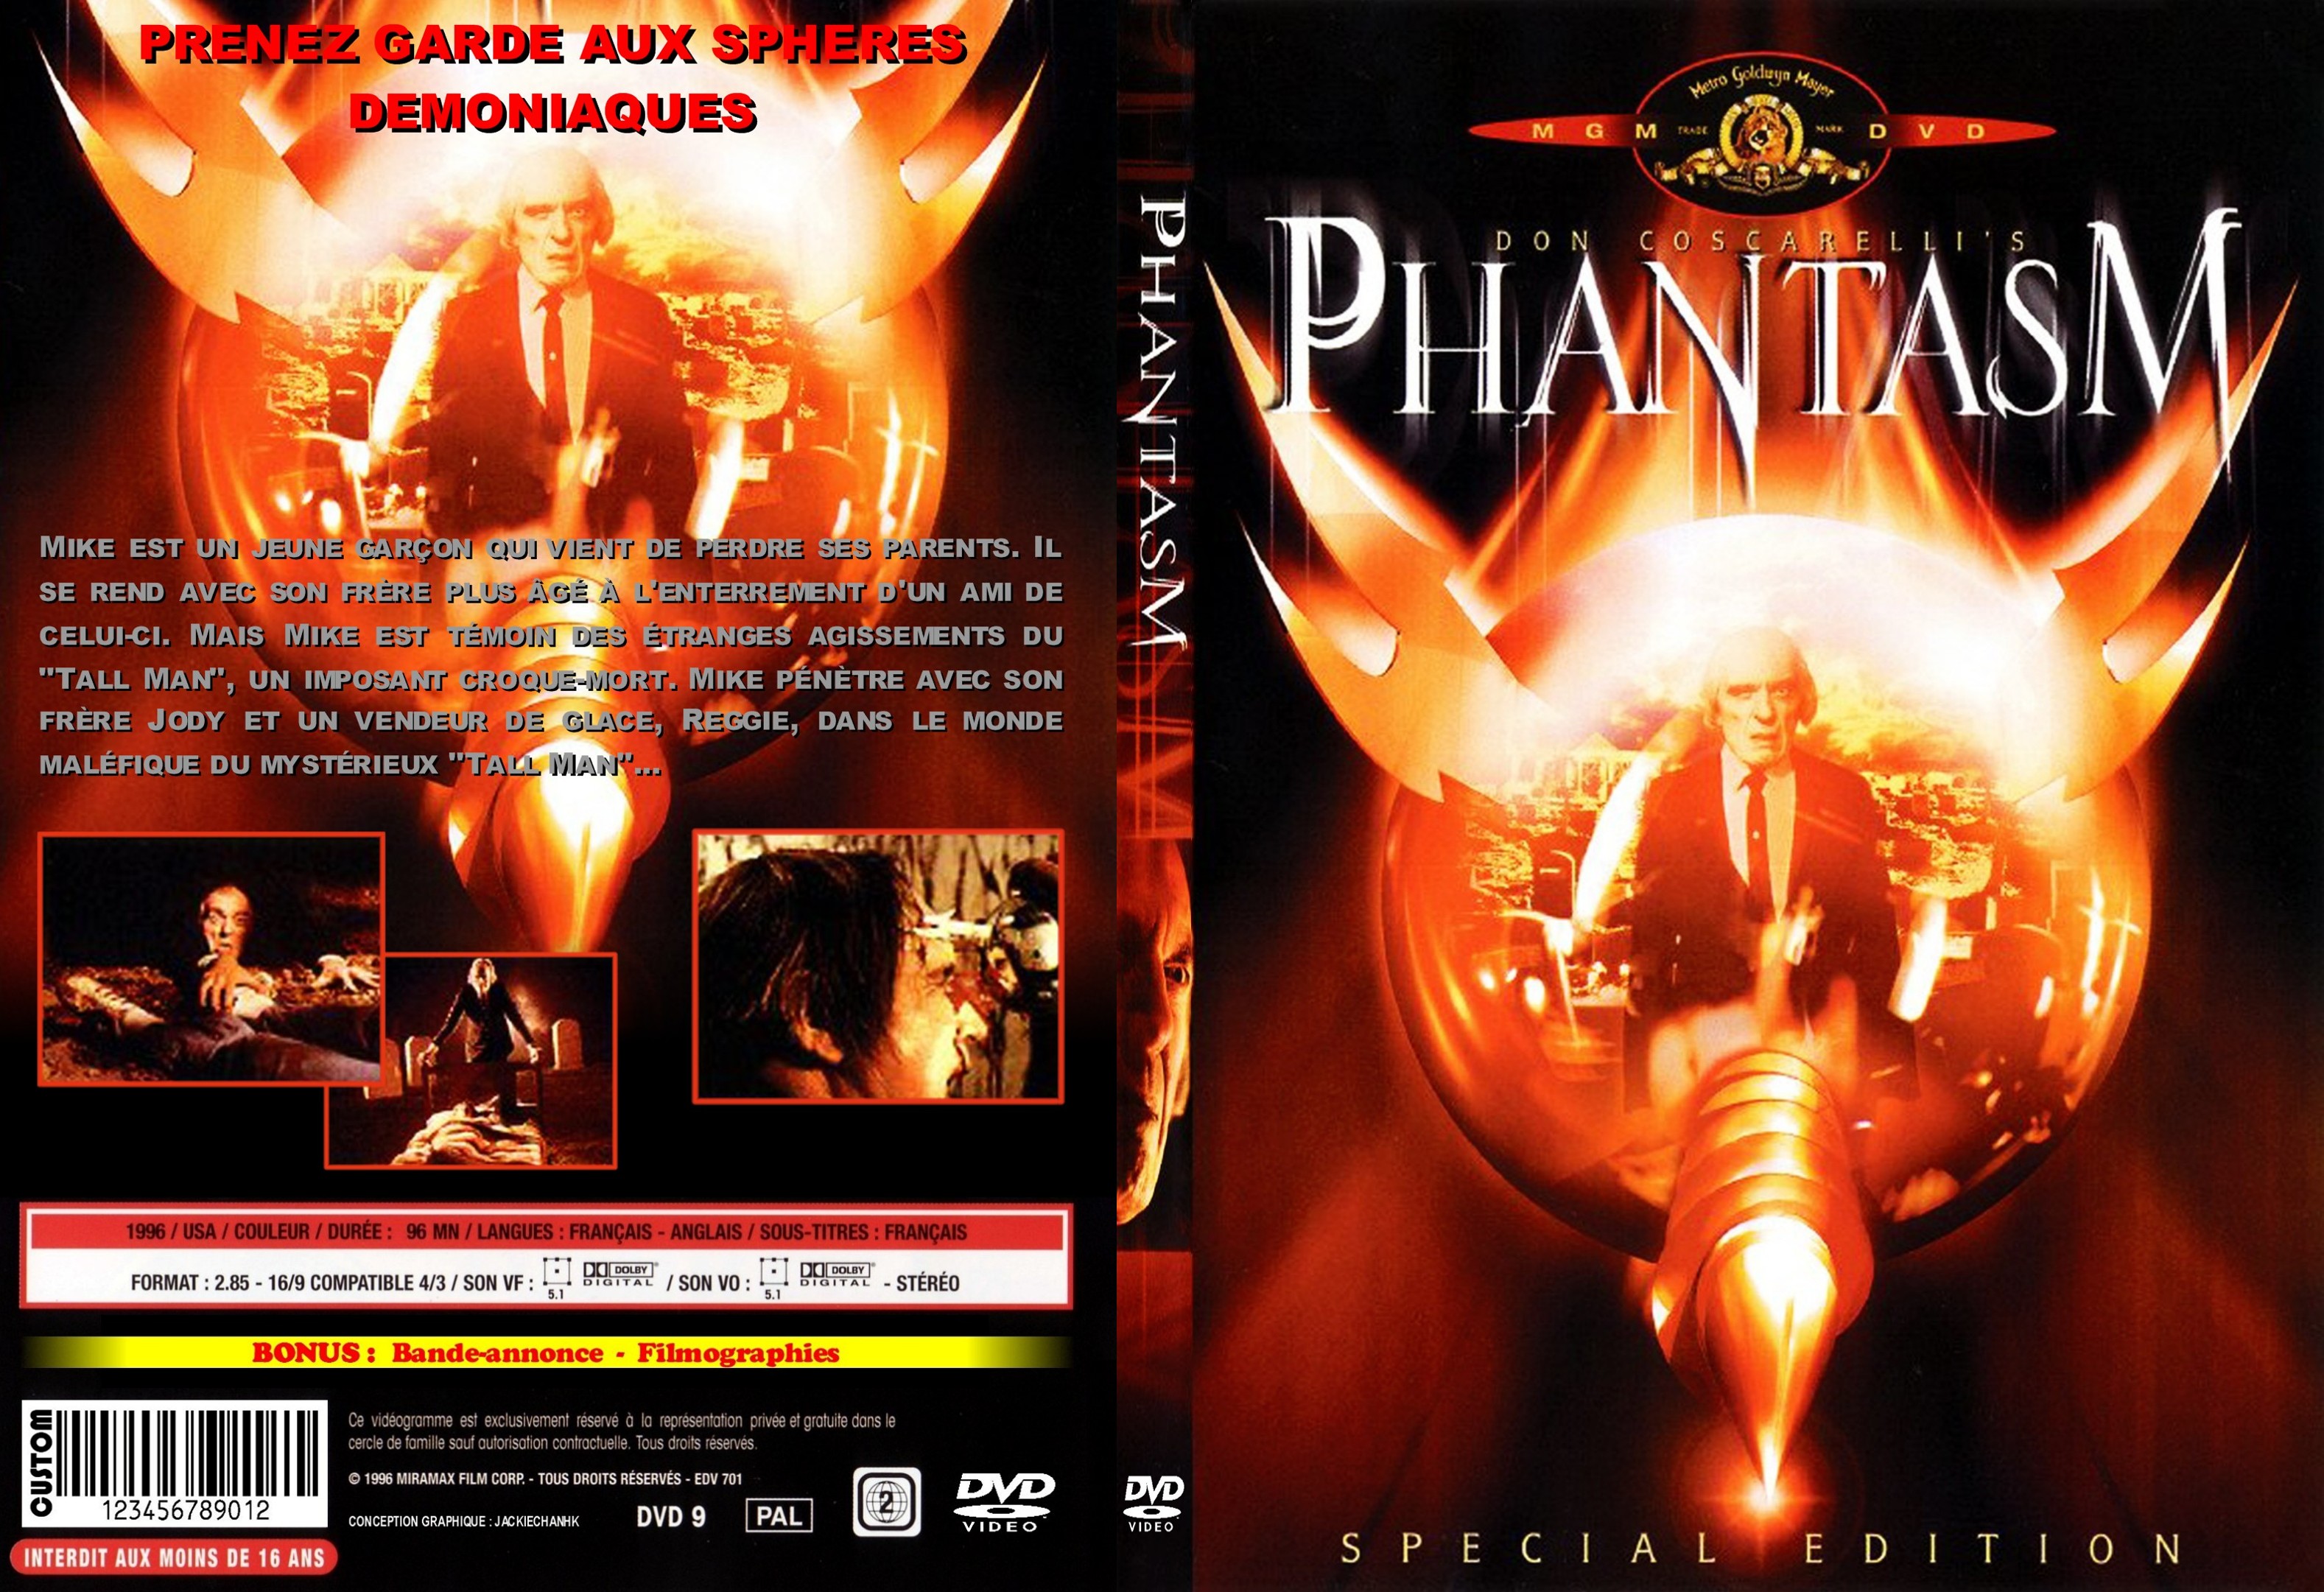 Jaquette DVD Phantasm custom - SLIM